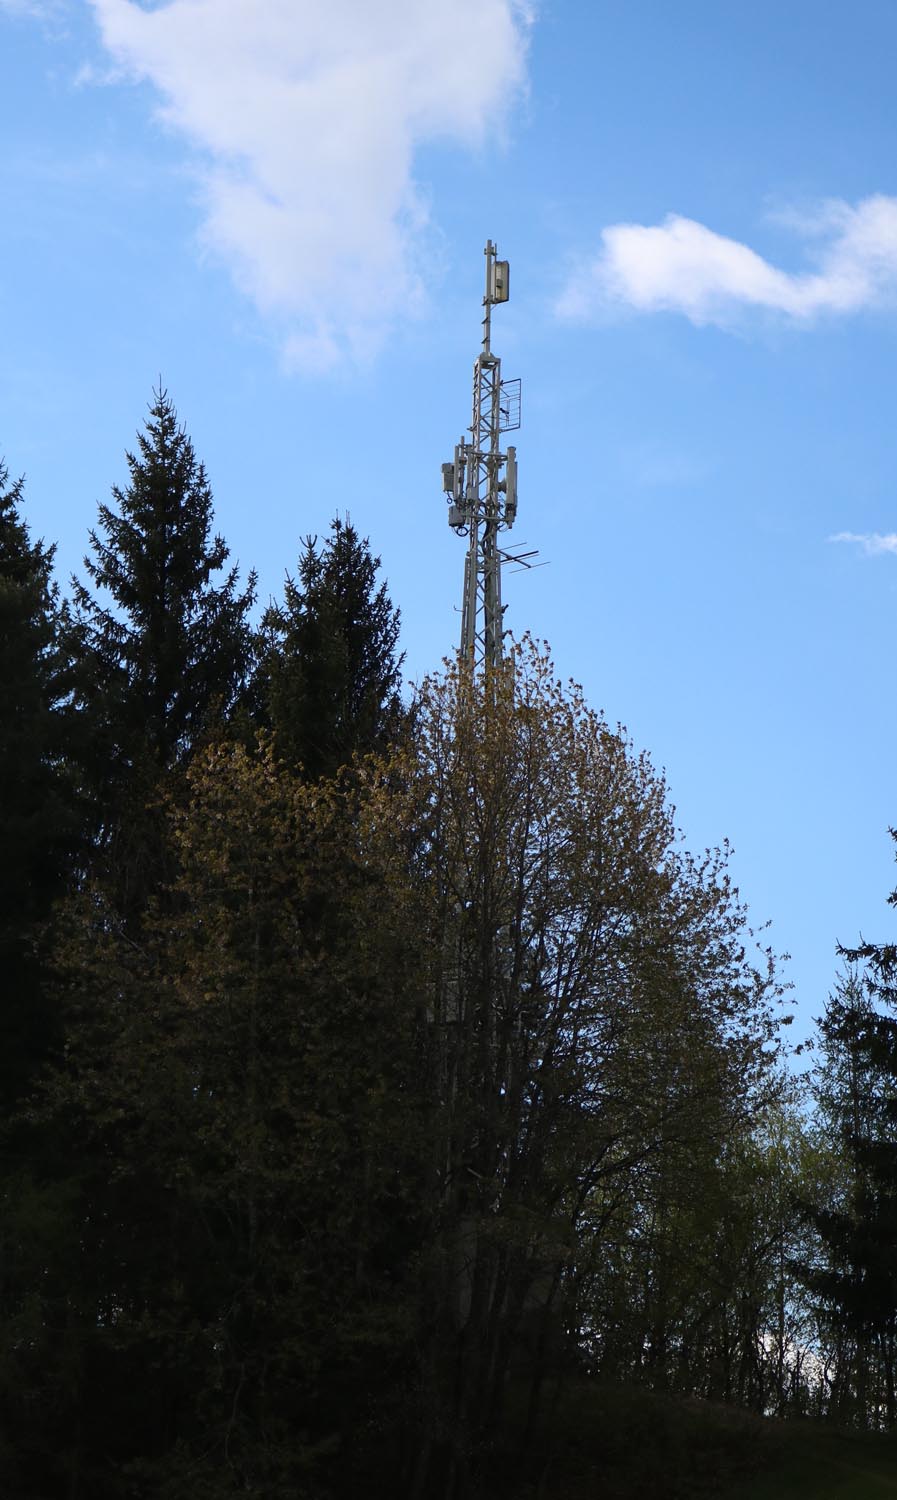 Sender Himmelberg bei Feldkirchen in Kärnten - Antennen